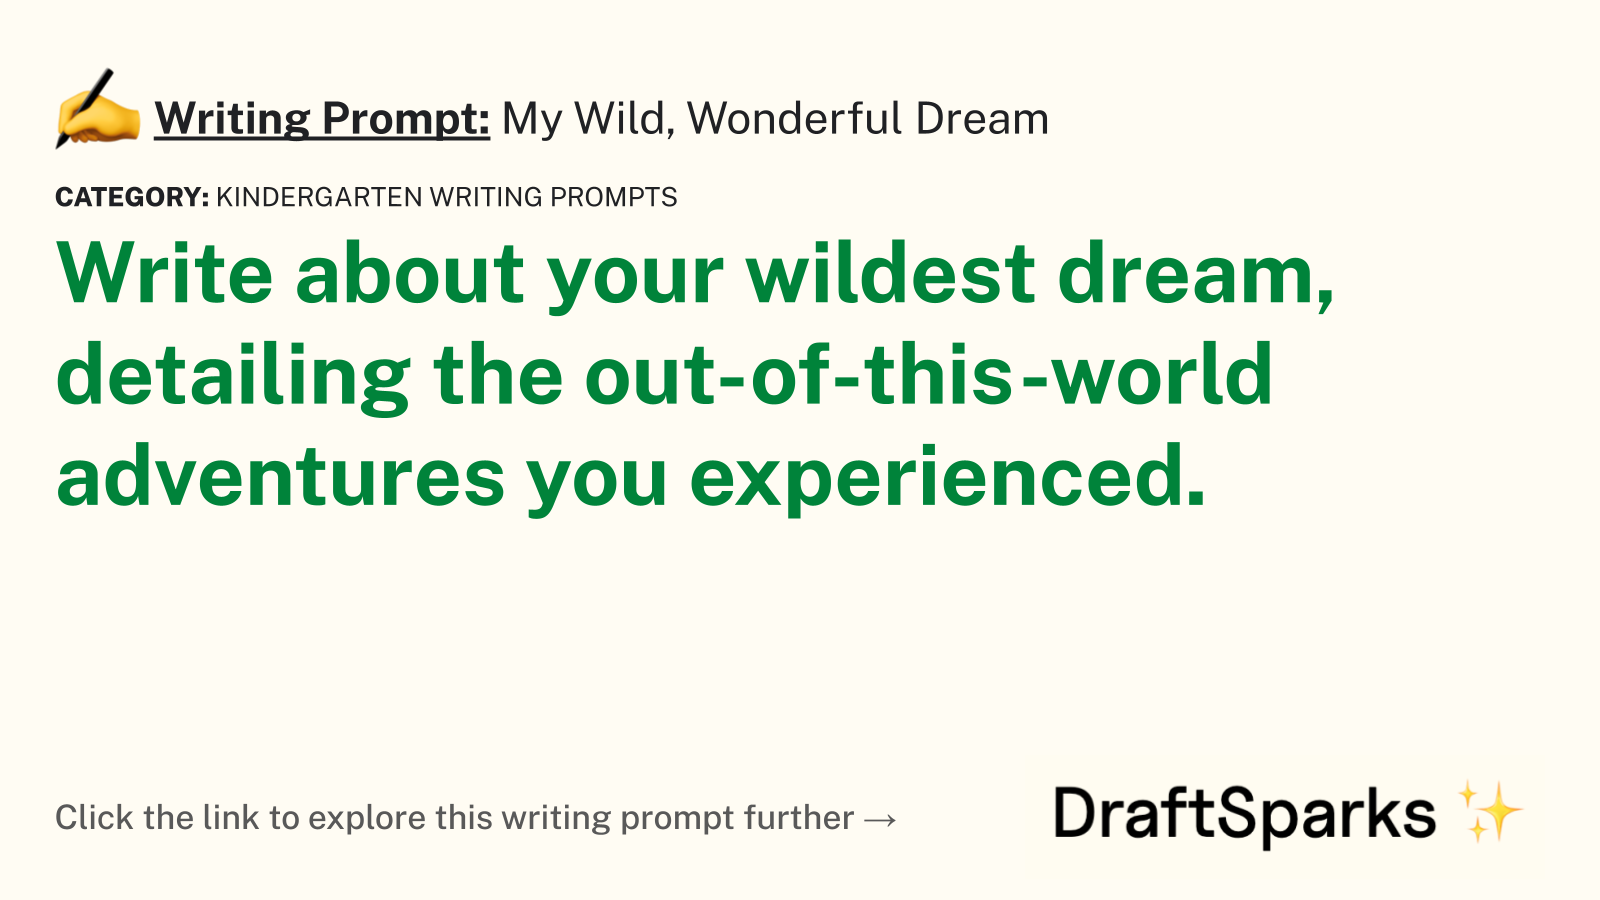 My Wild, Wonderful Dream